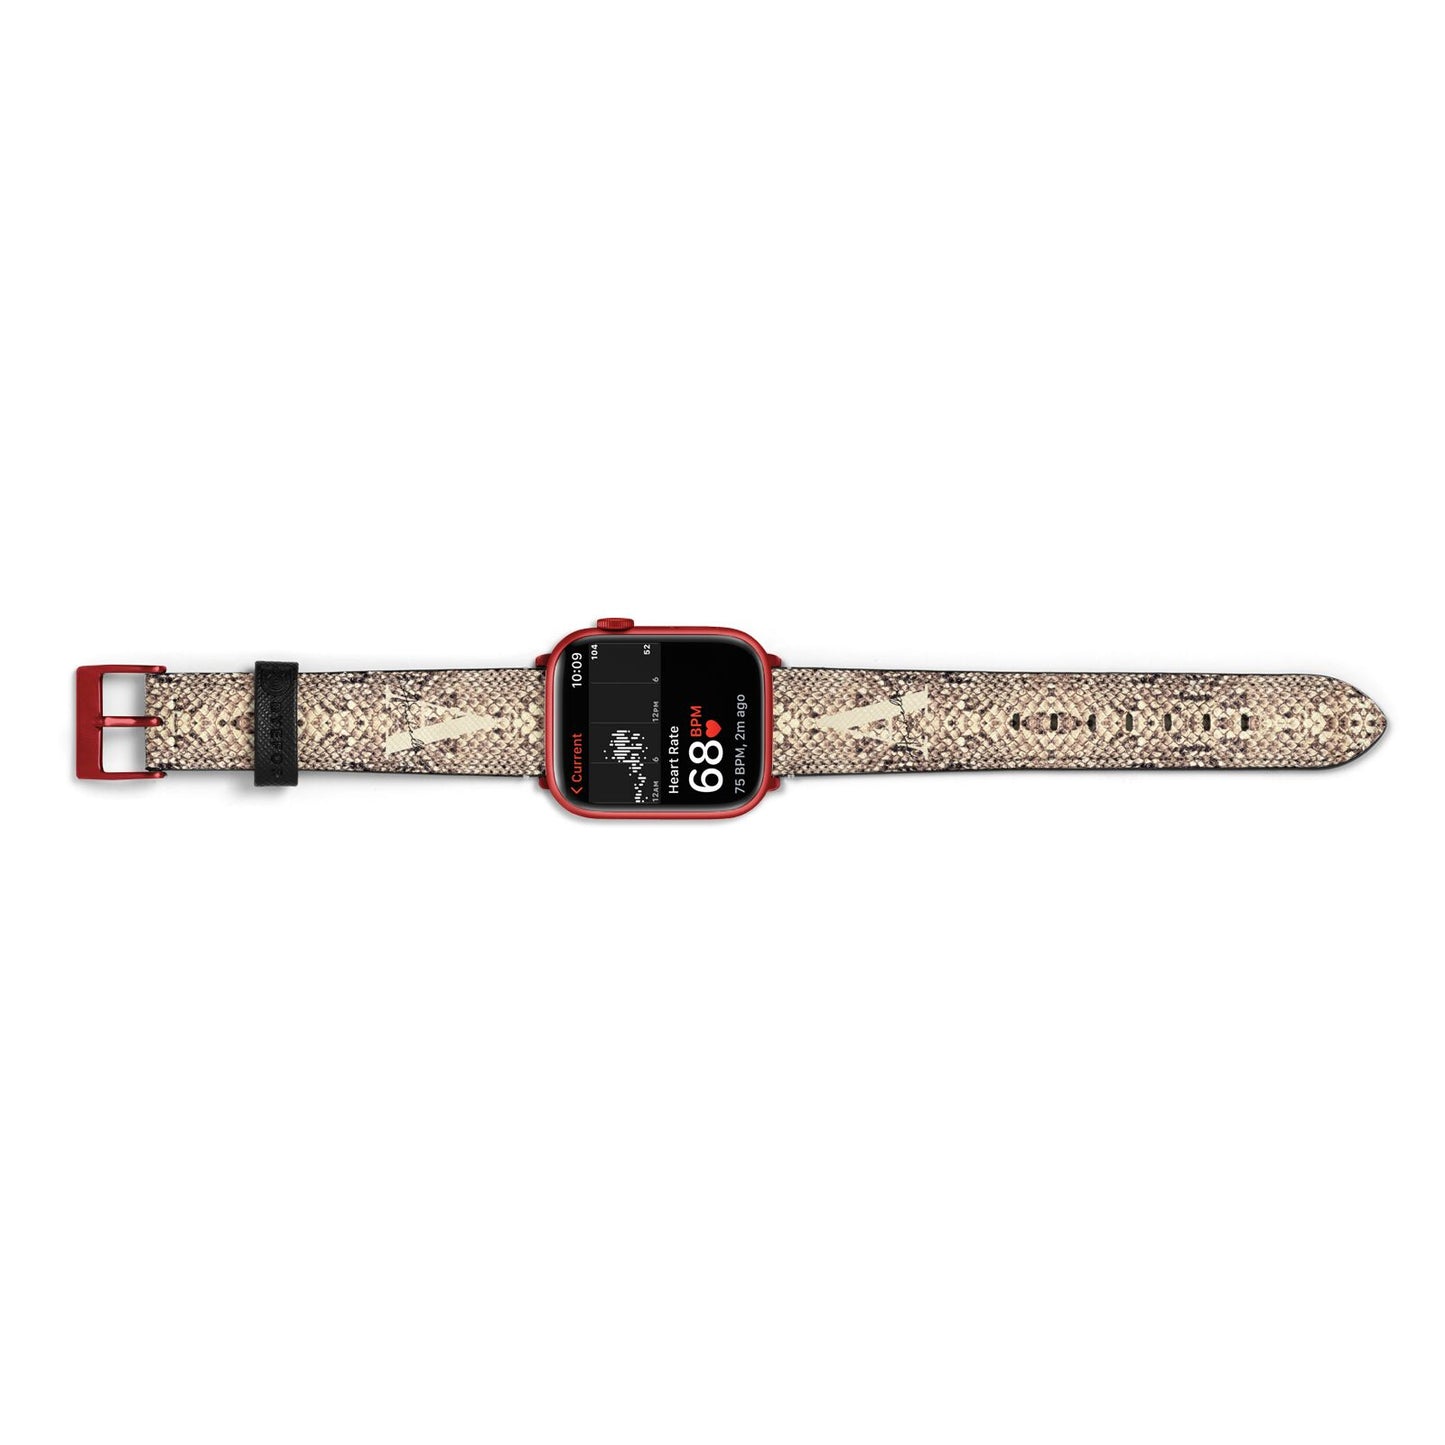 Personalised Snake Skin Effect Apple Watch Strap Size 38mm Landscape Image Red Hardware